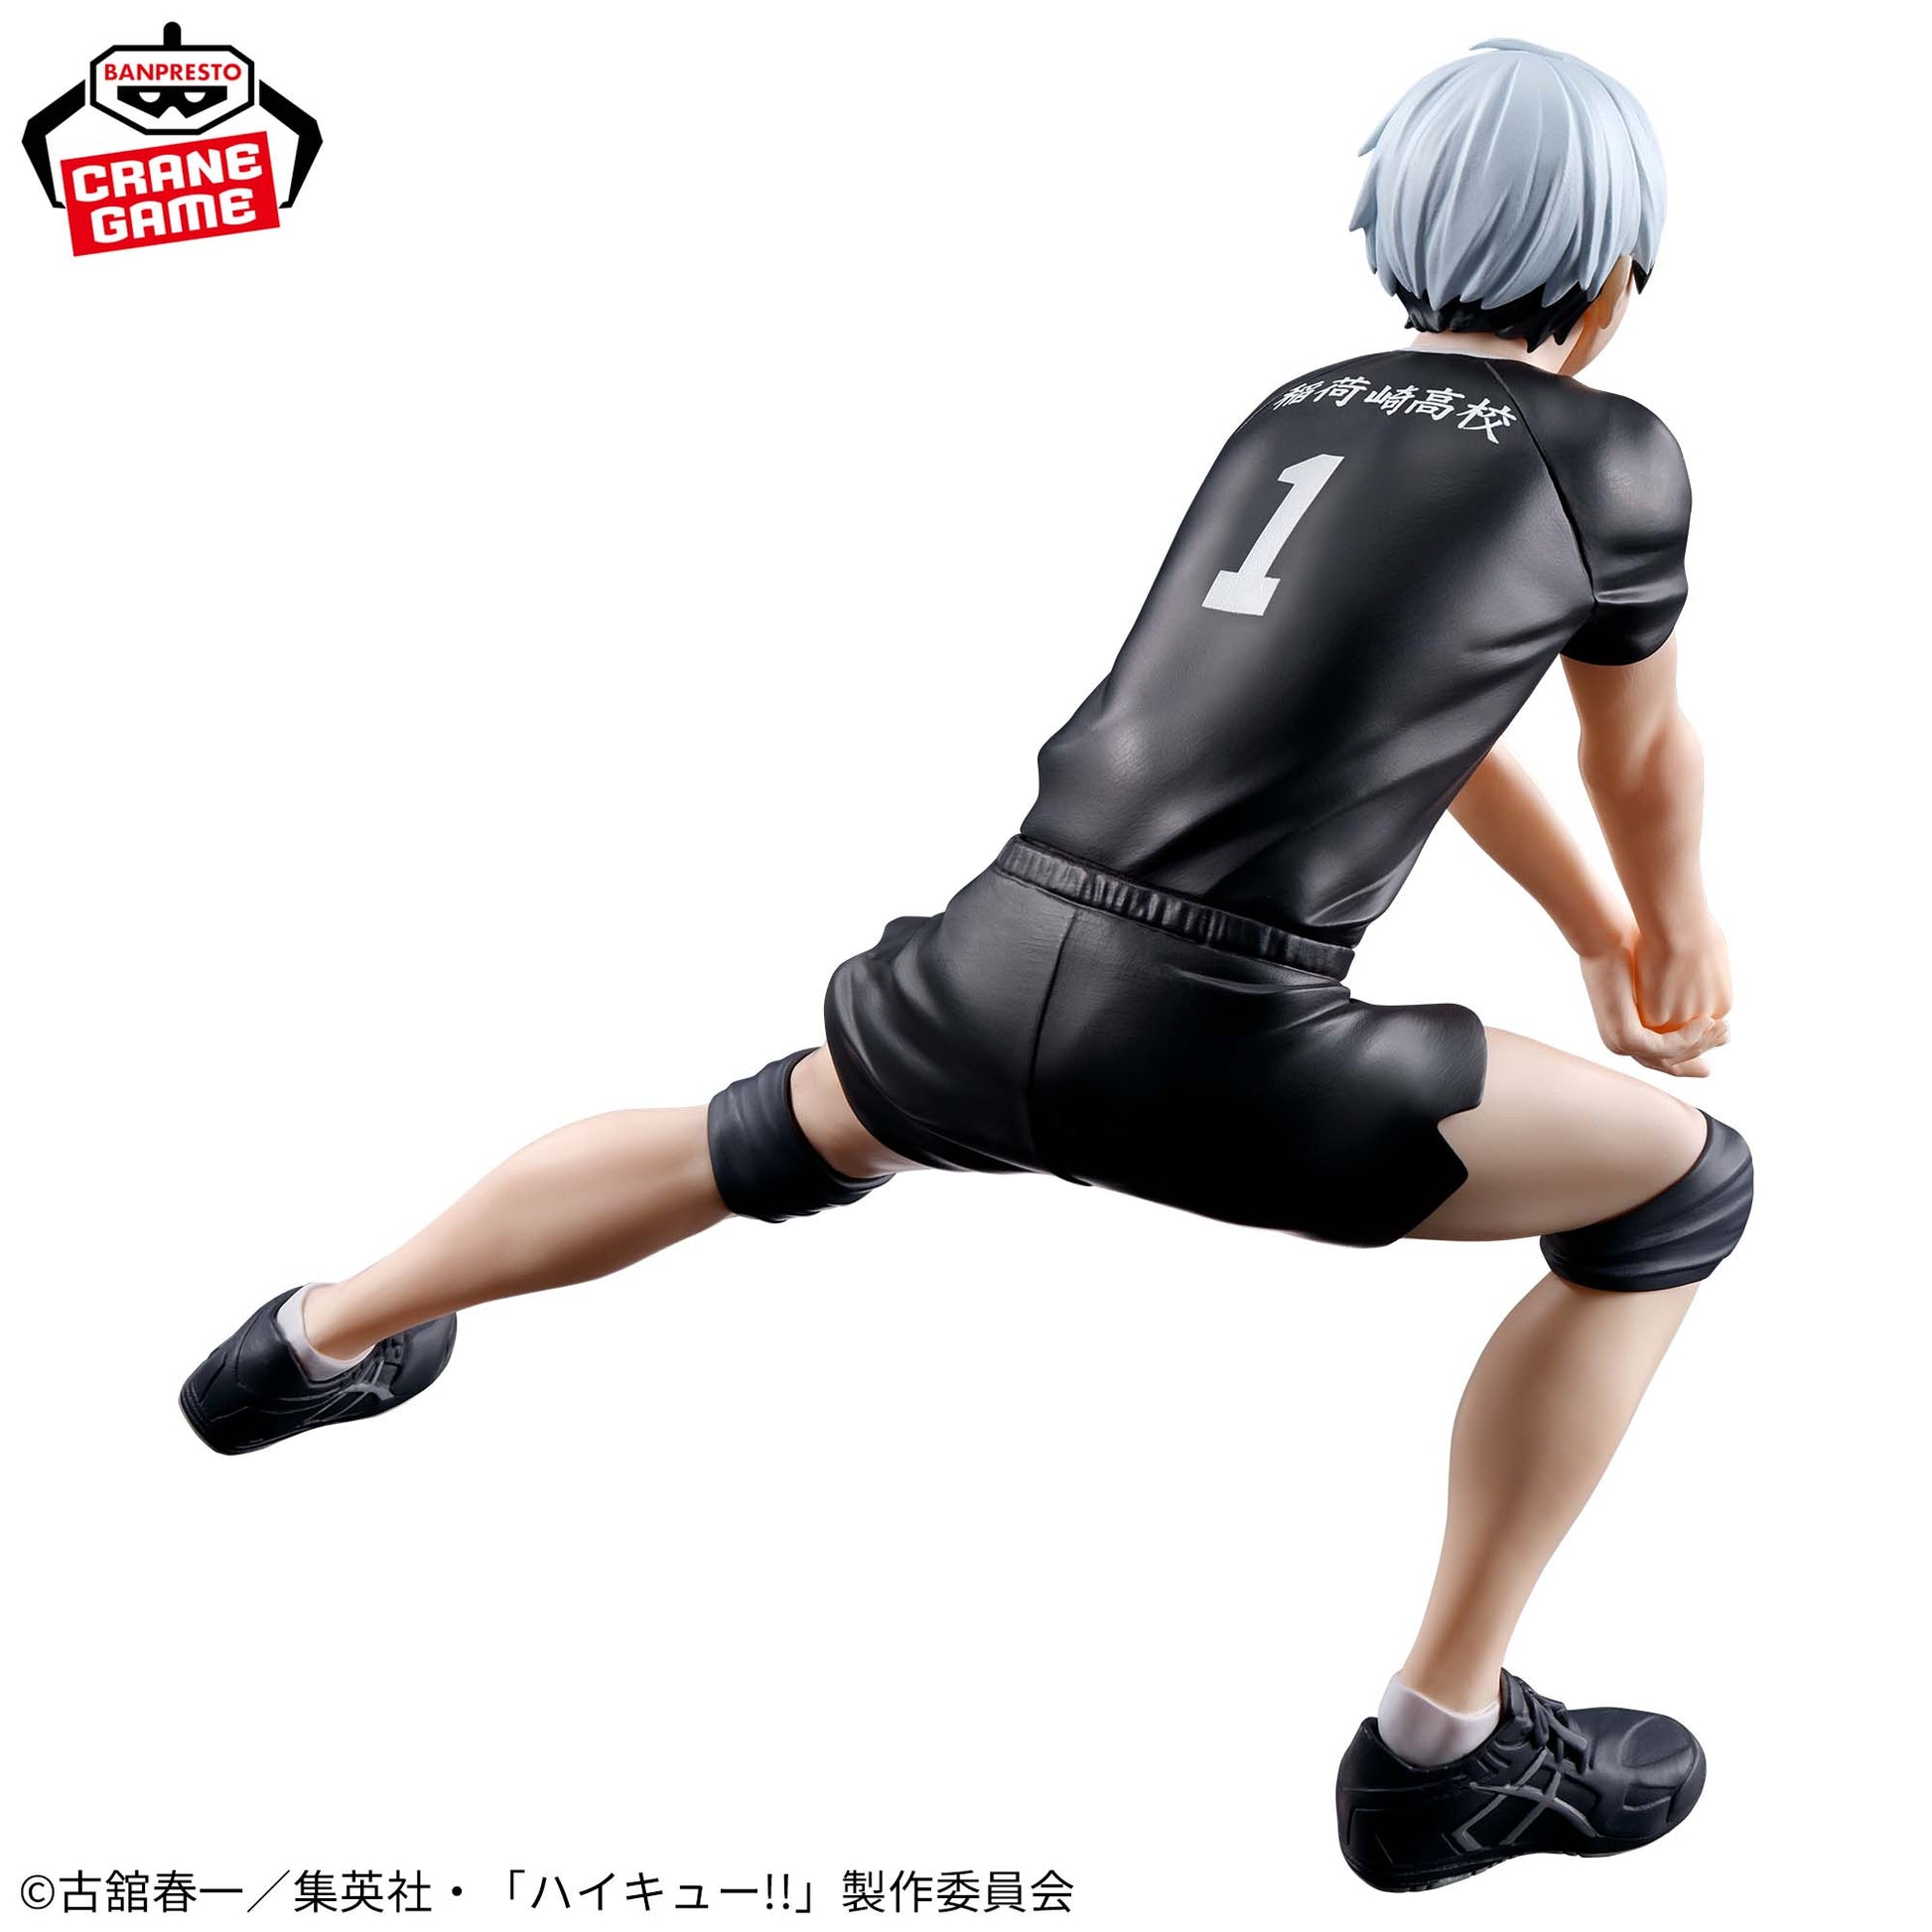 Figurine Shinsuke Kita Posing Figure Haikyuu